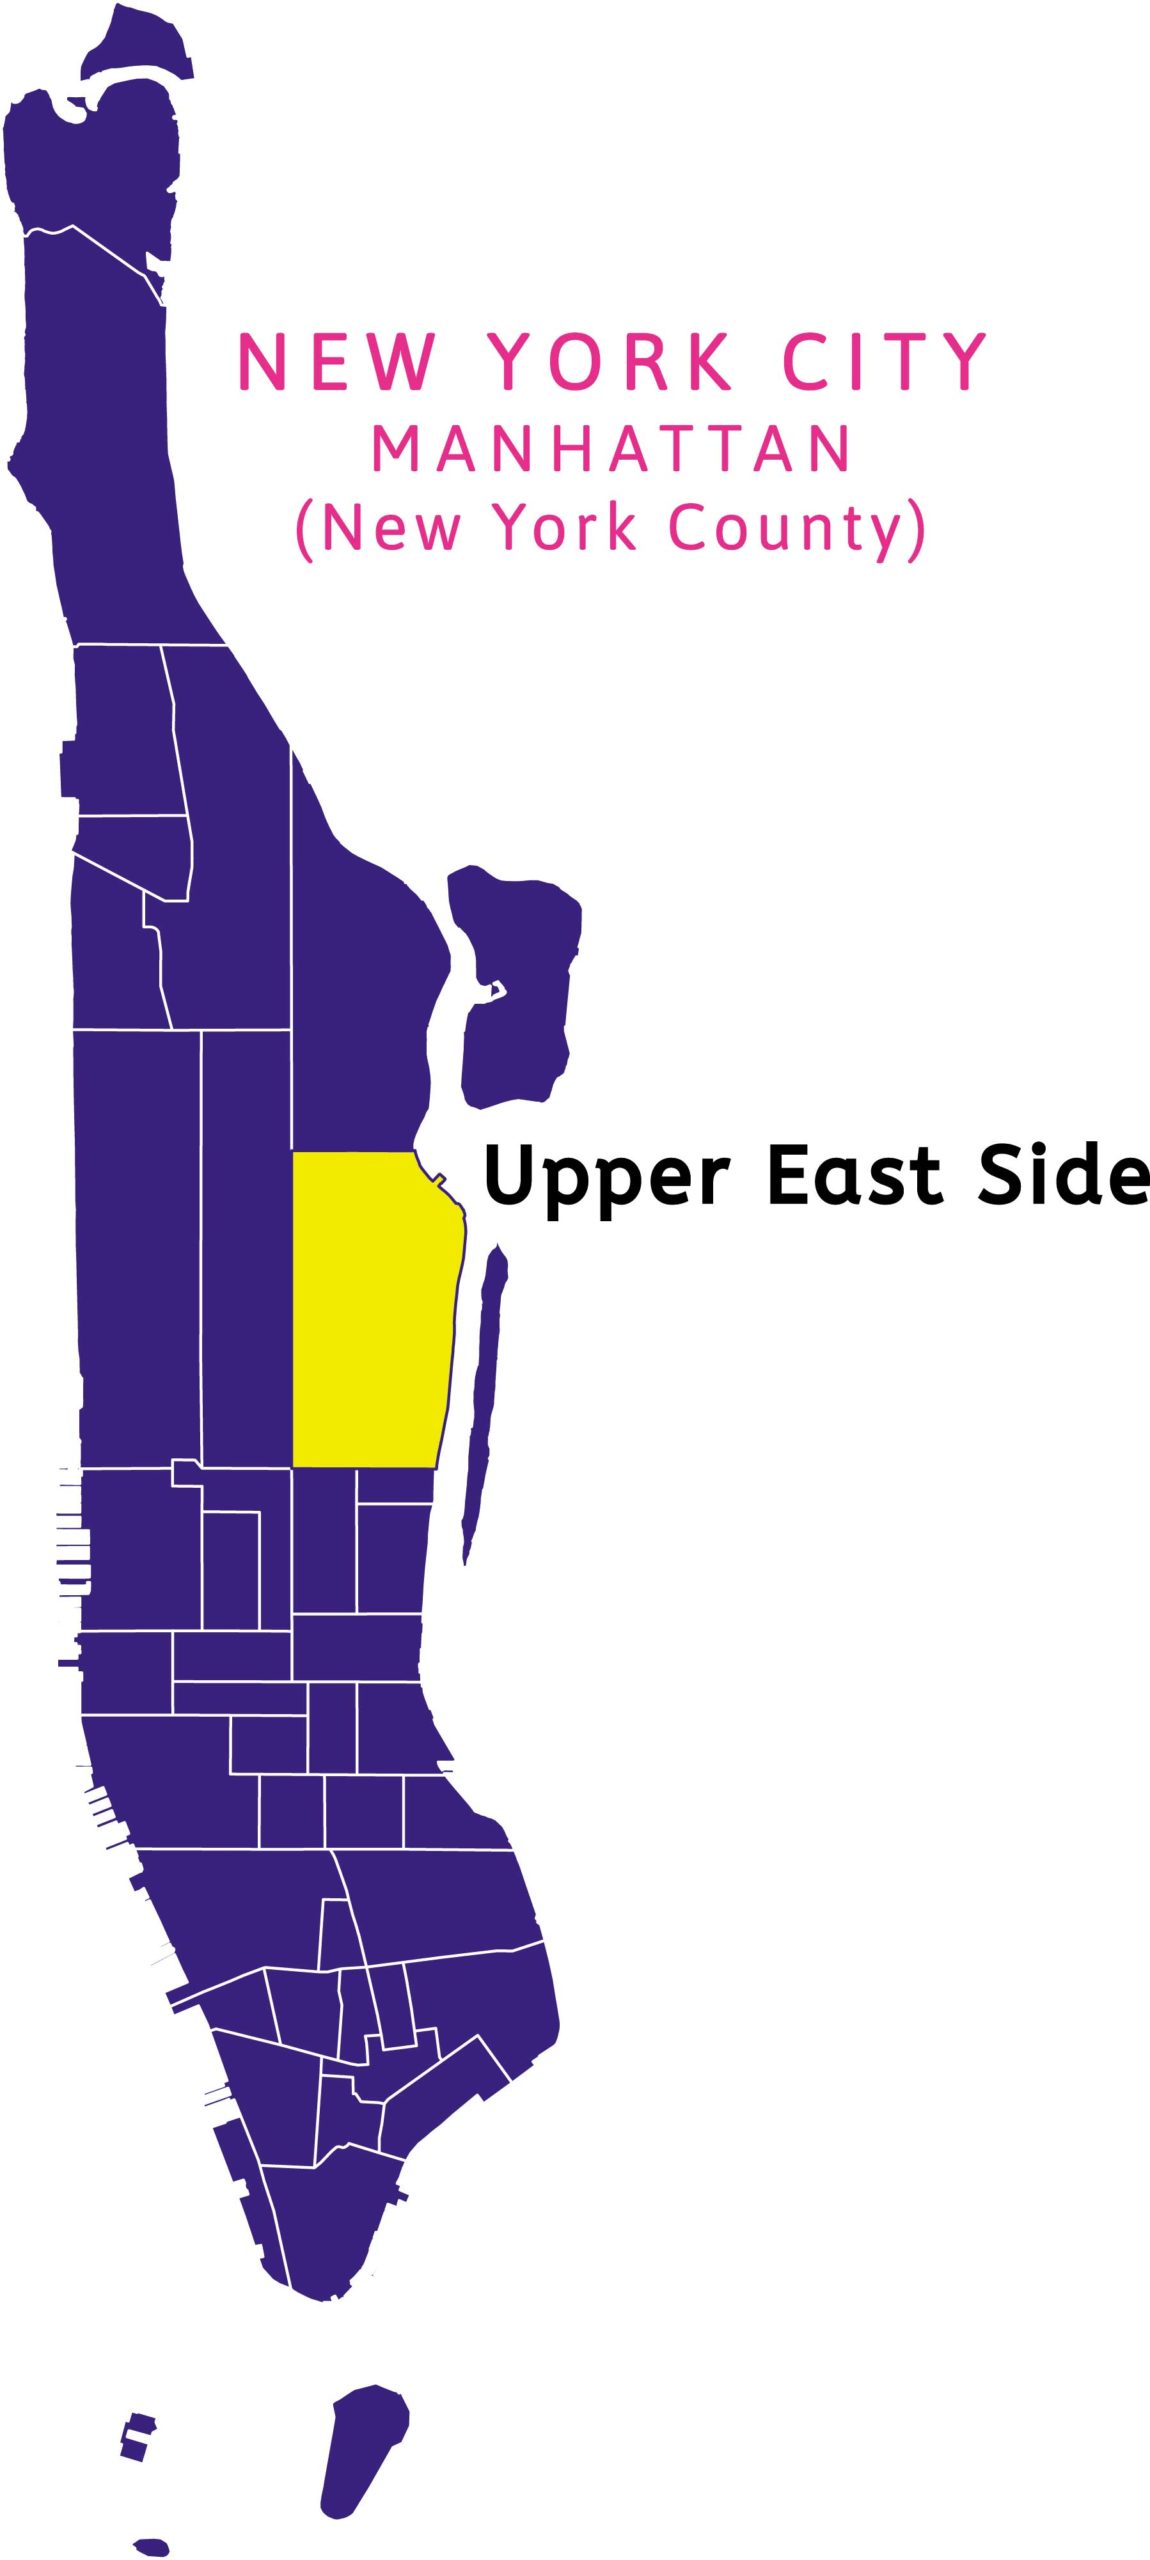 Upper West Side neighborhood location on map of Manhattan New York City